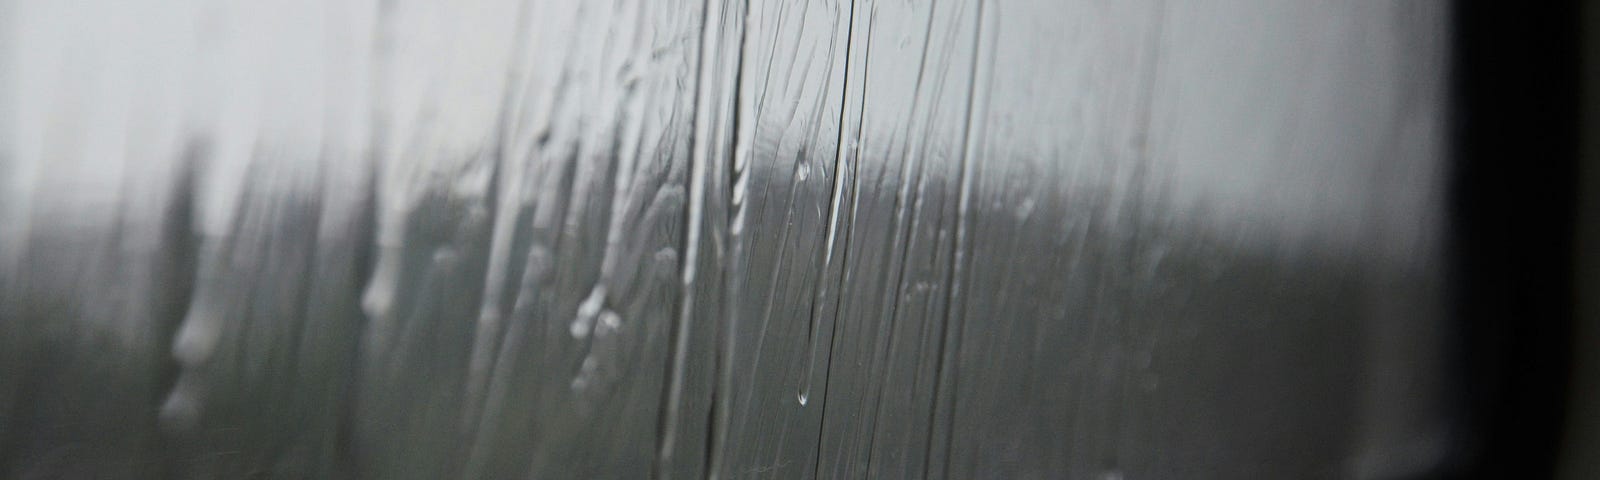 a rain-splashed window in black and white